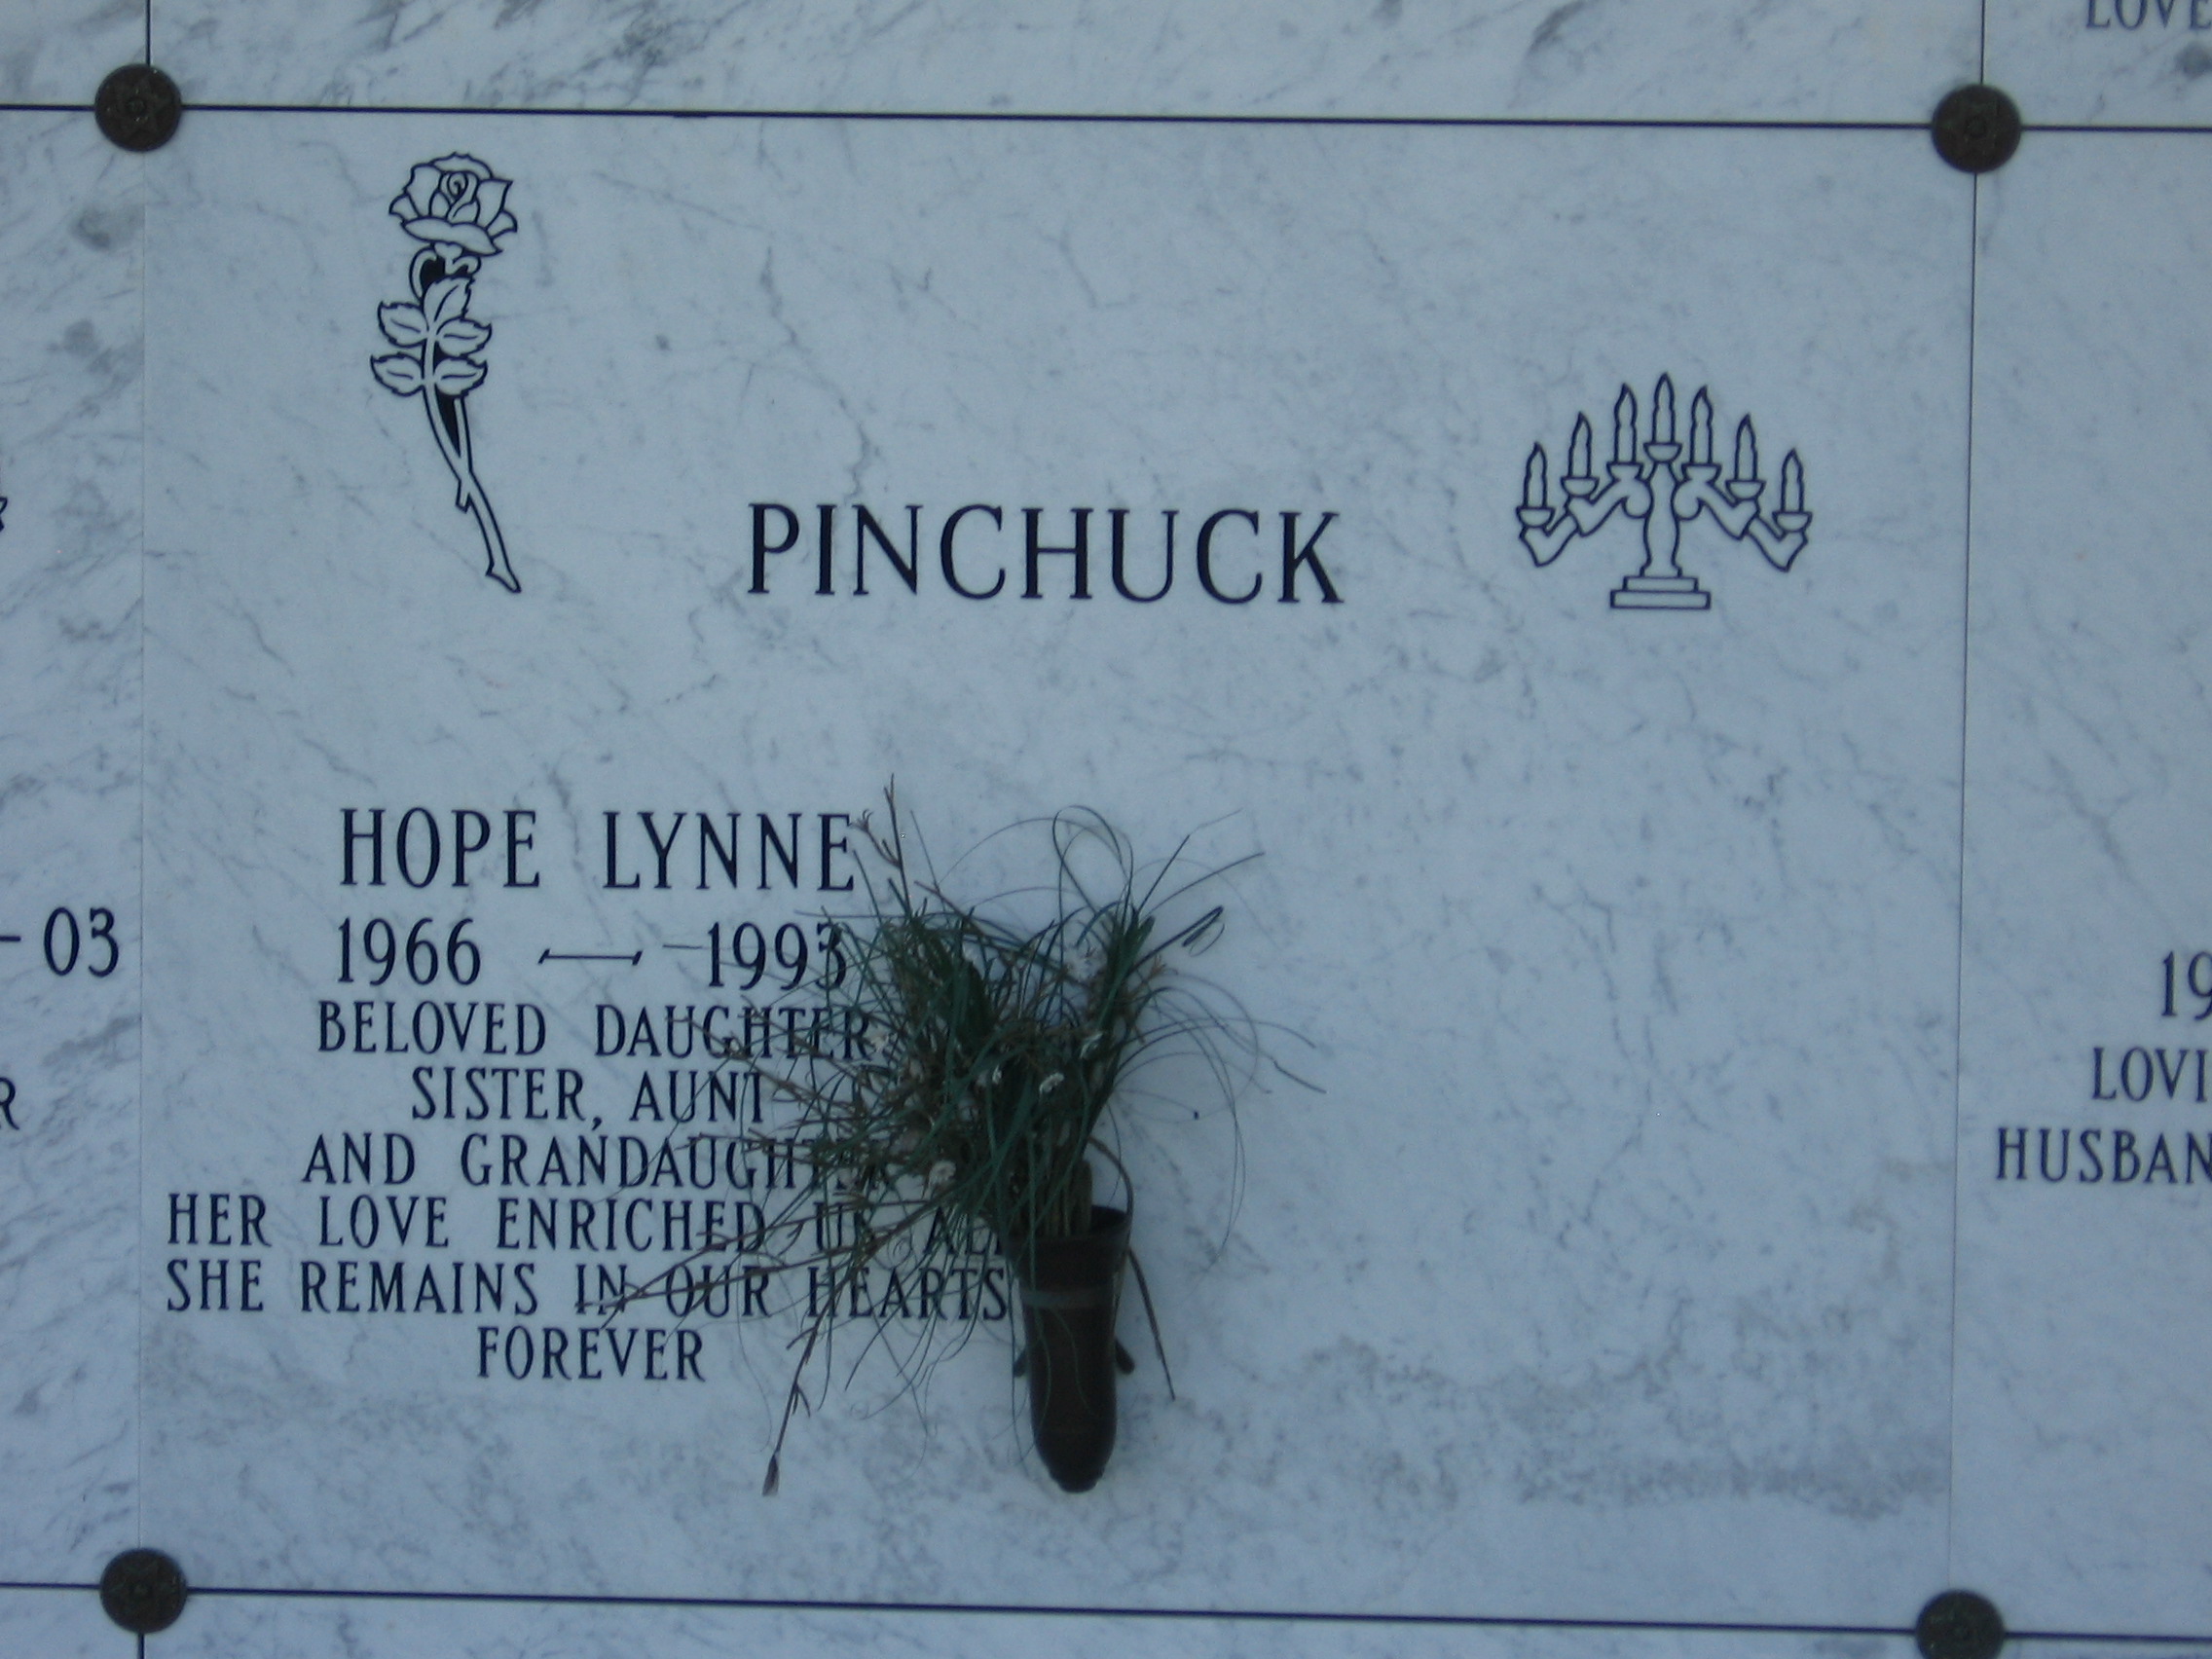 Hope Lynne Pinchuck